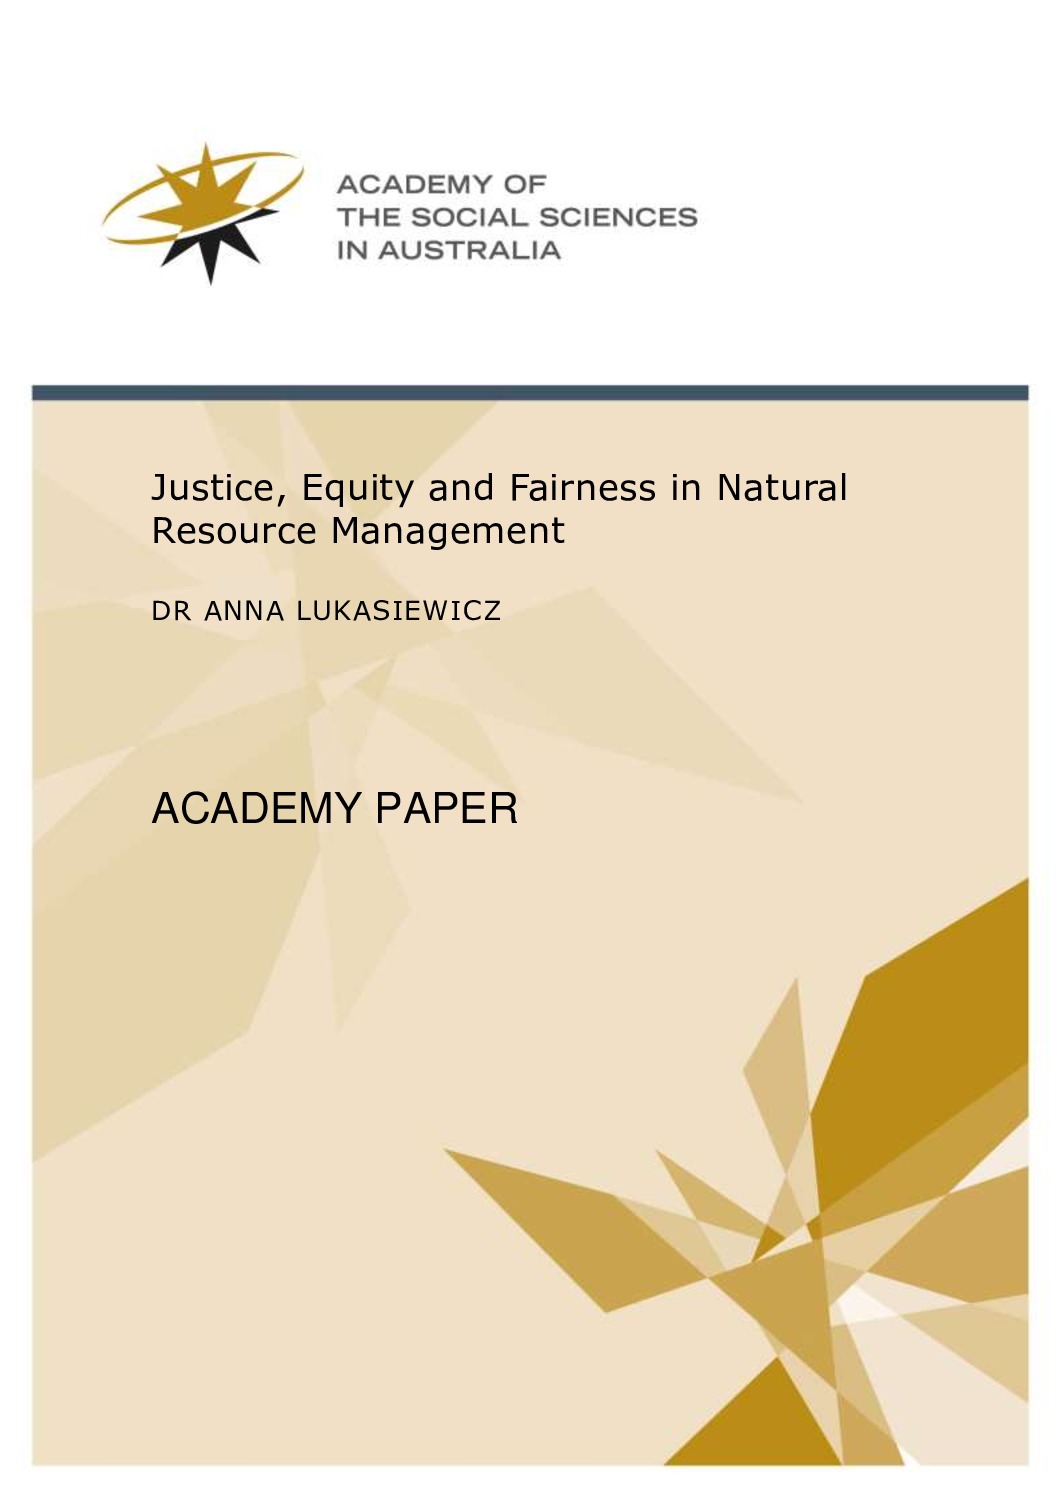 Academy Paper 1 2016 Final1 4 pdf 1